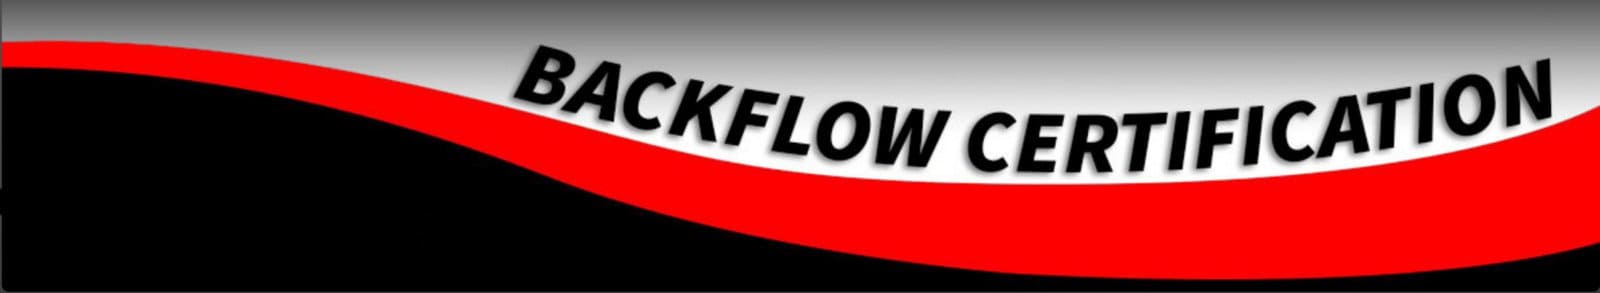 Backflow Testing Broward County